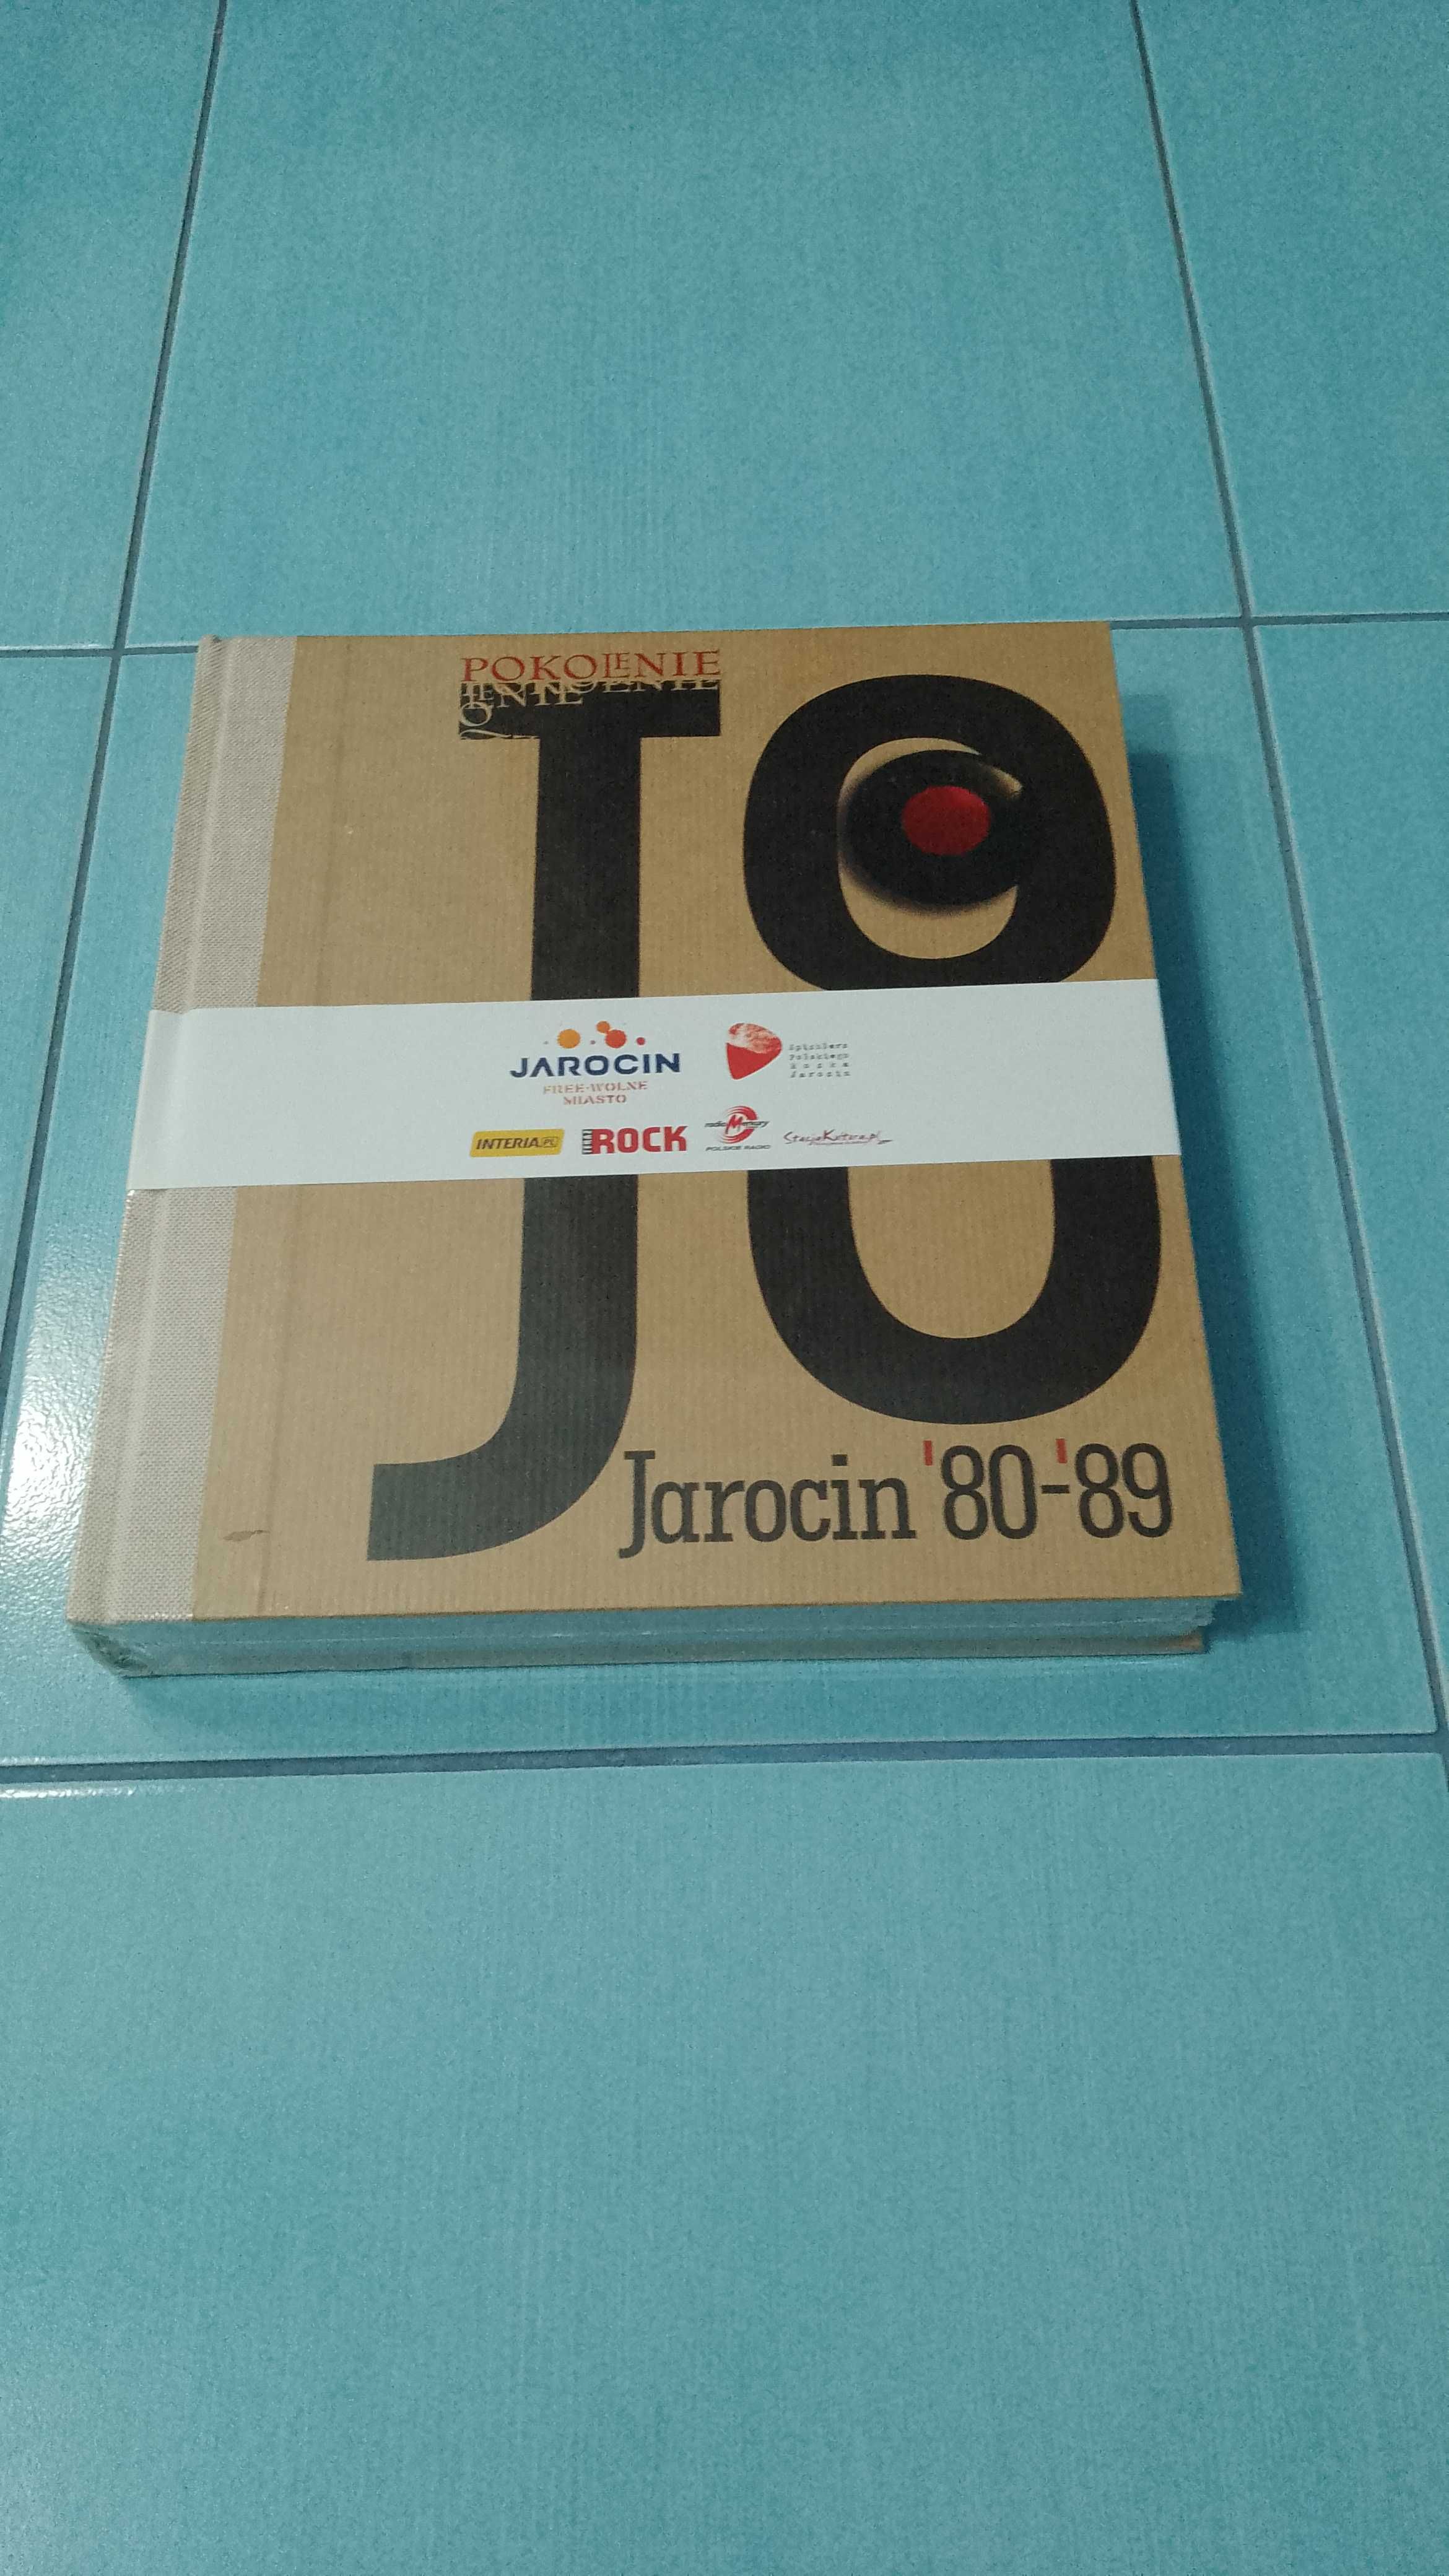 książka-album "Pokolenie J8 Jarocin 80-89", festiwal rockowy, unikat